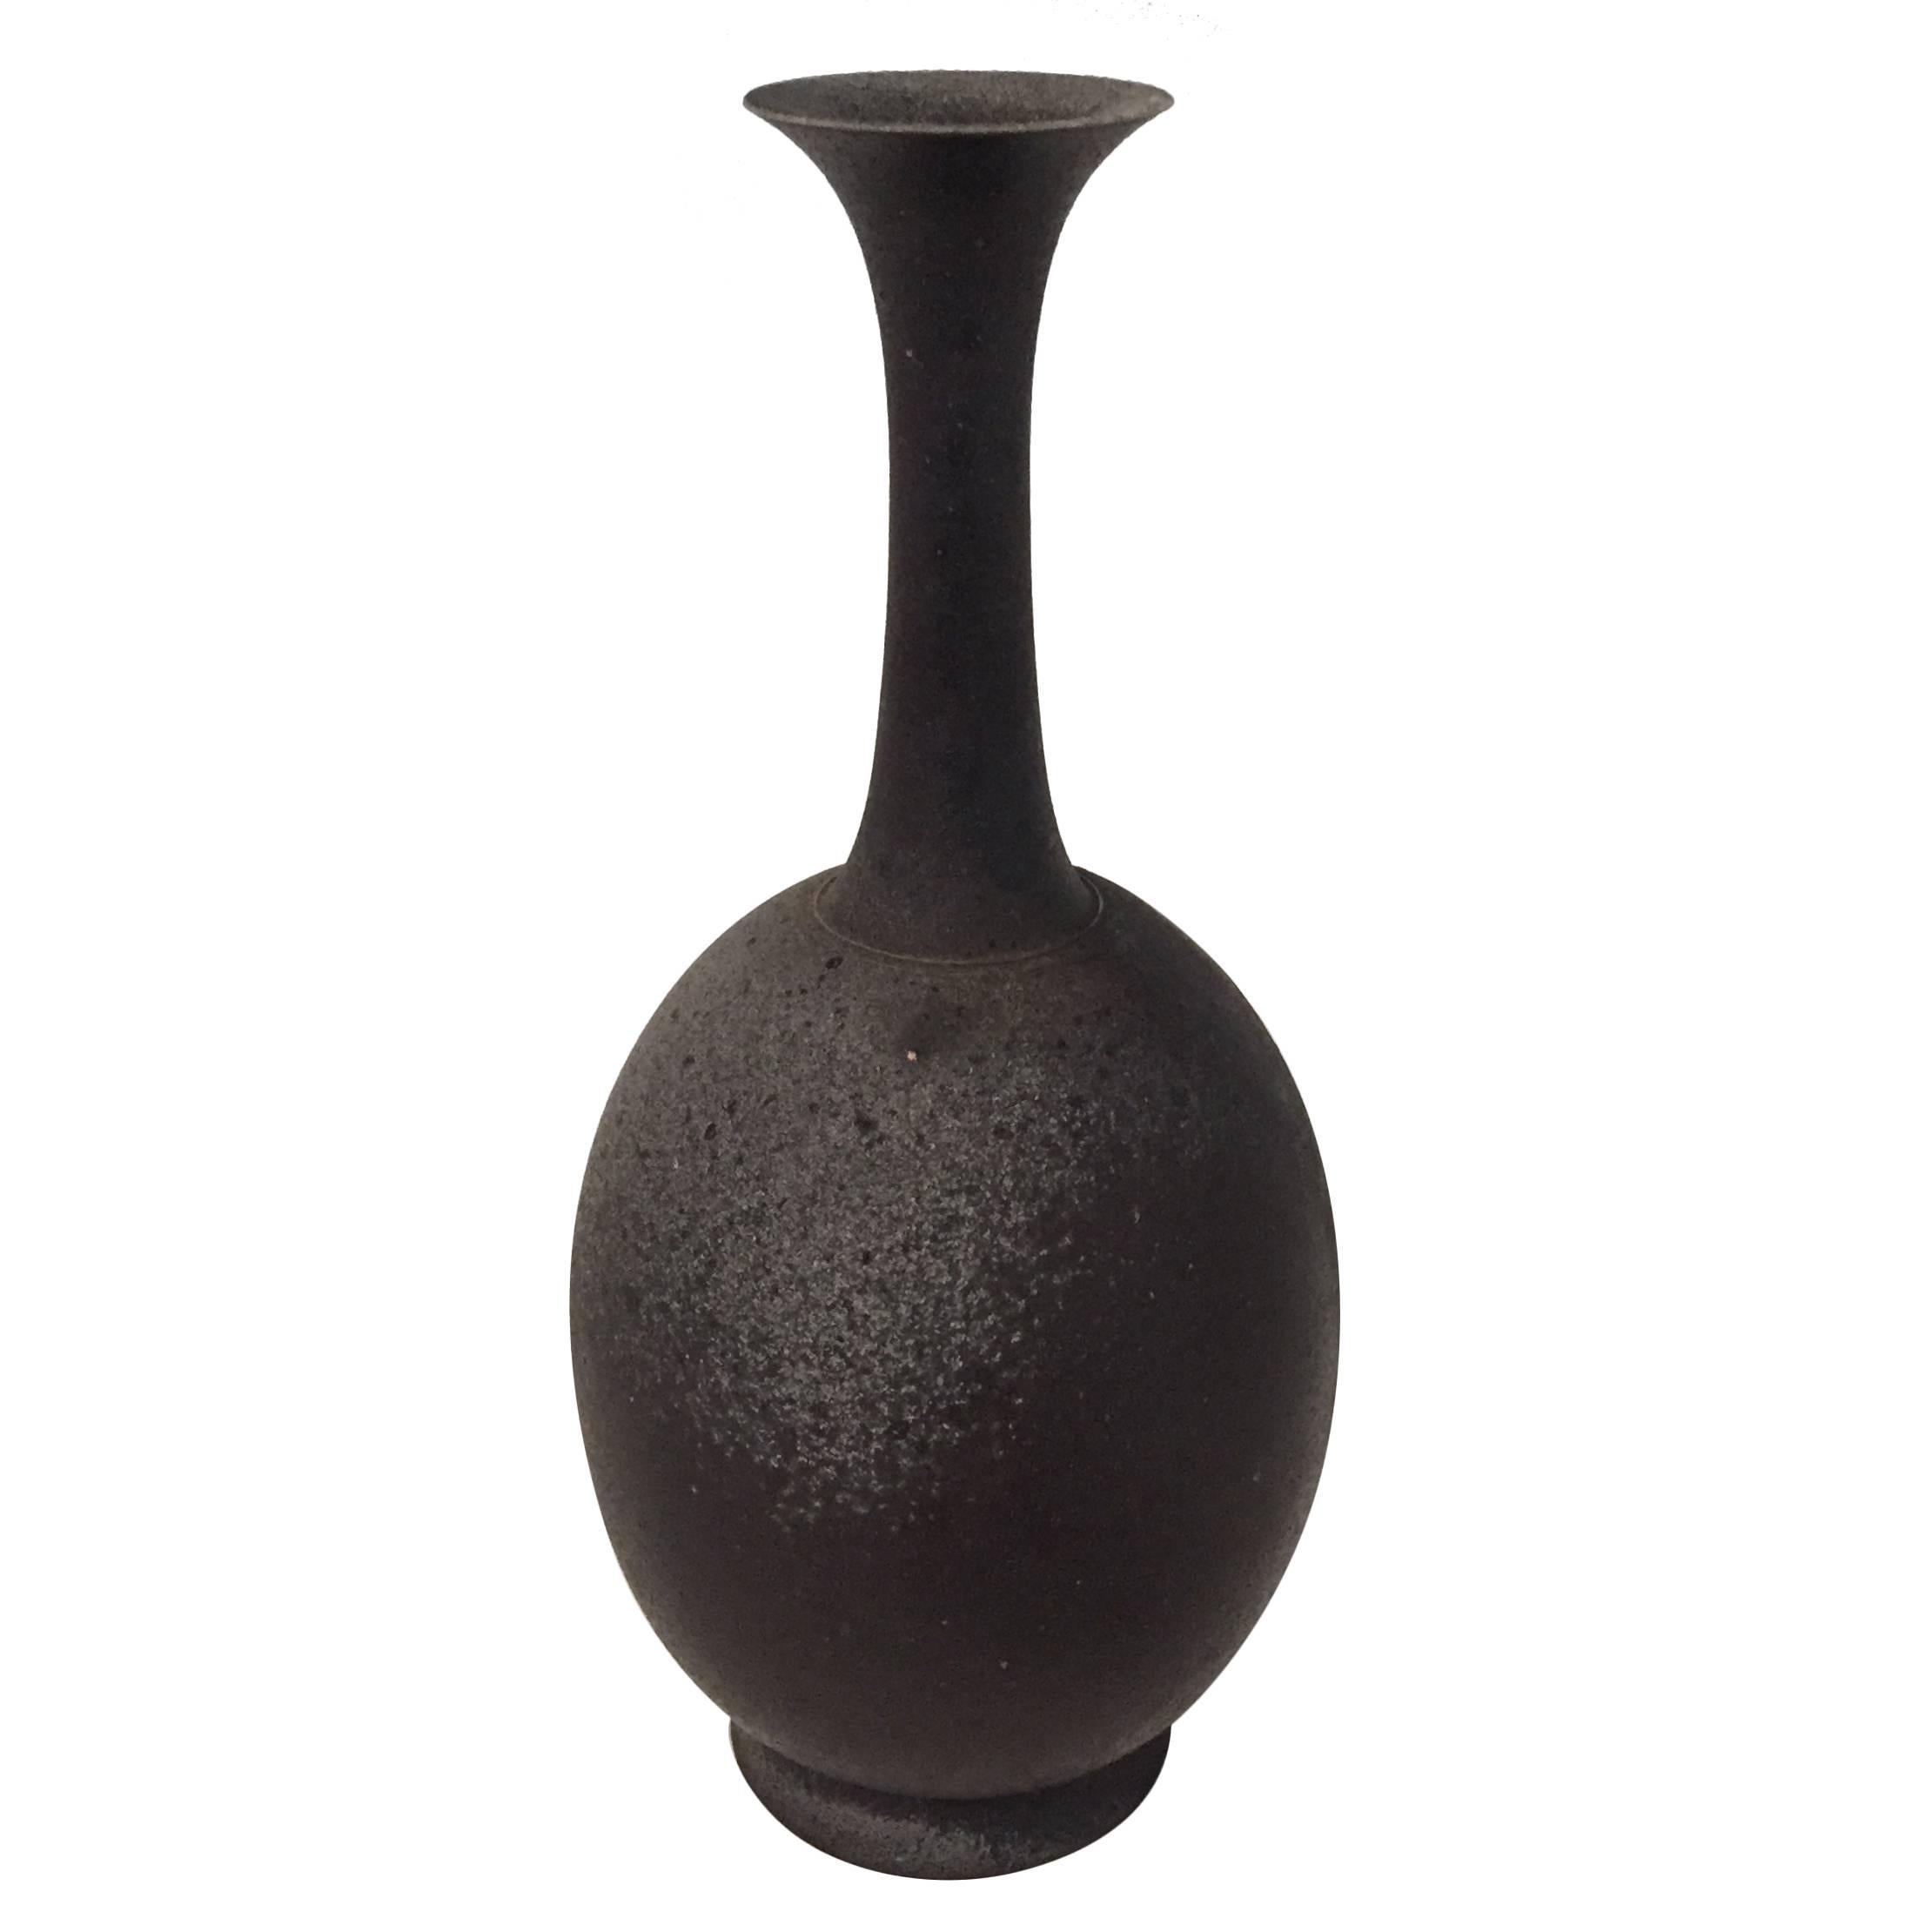 Contemporary Stoneware Vase by Japanese Ceramicist Koji Toda